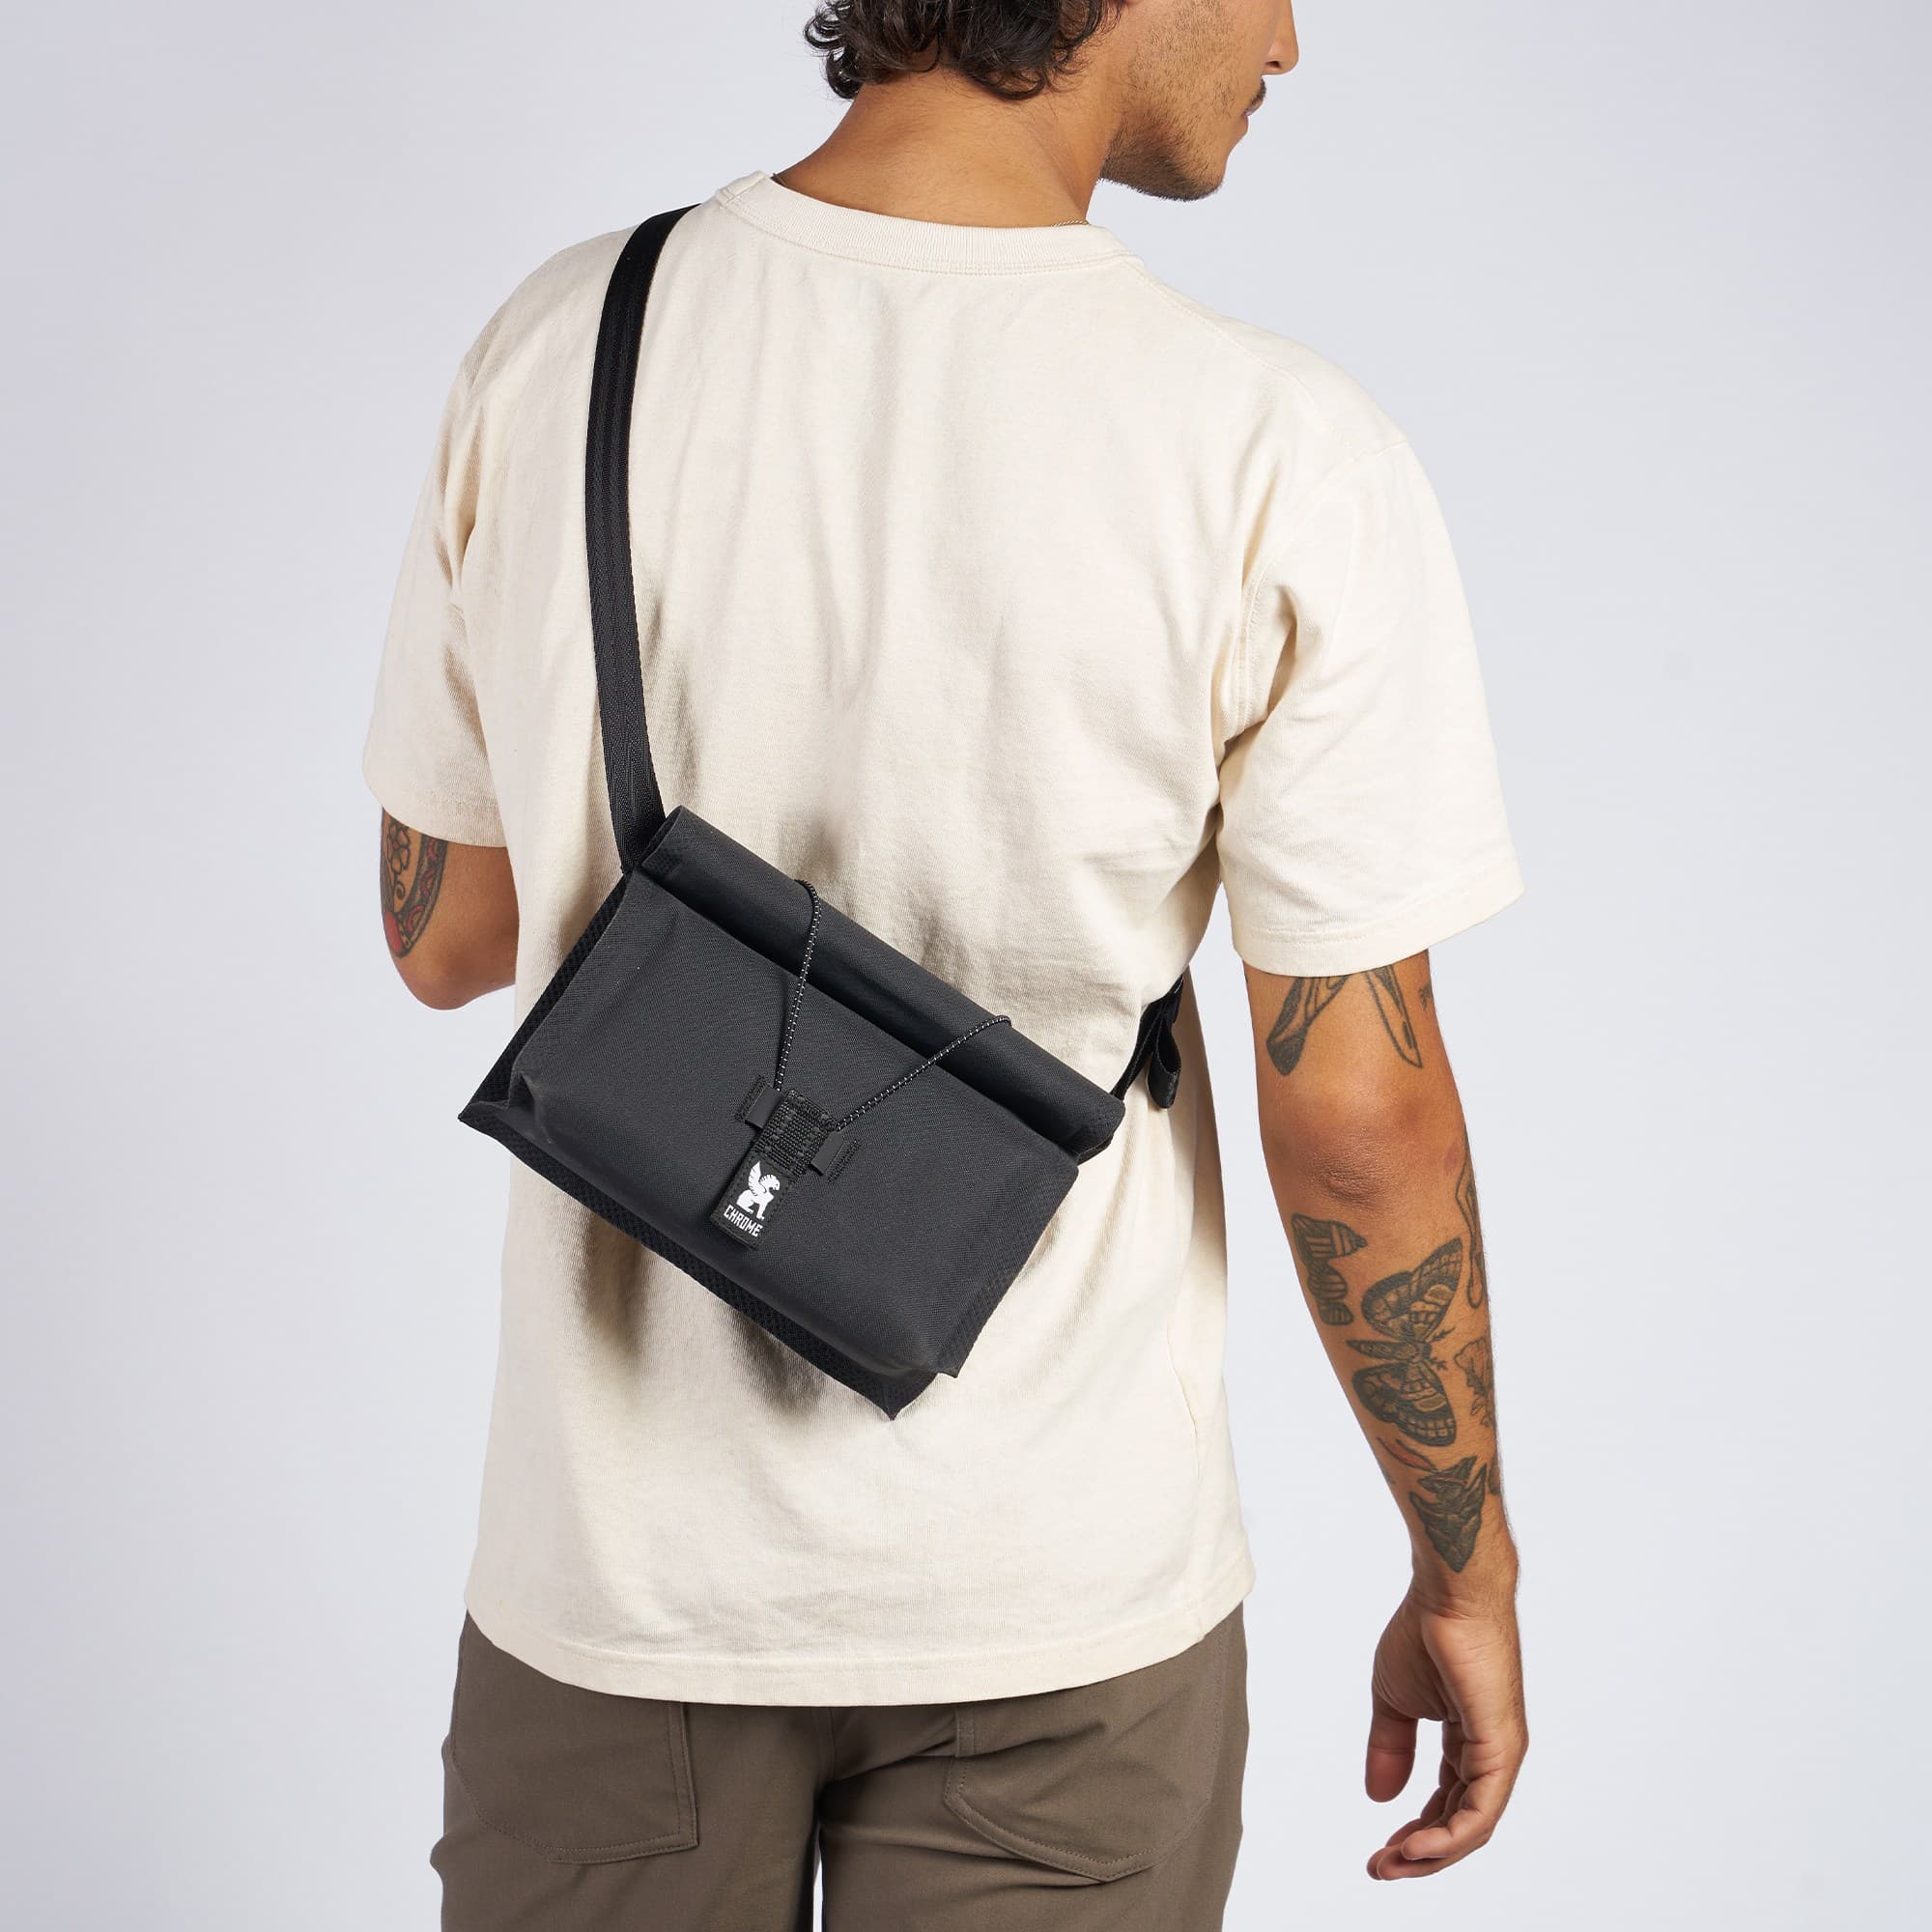 Urban Ex handlebar bag worn by a man as a sling